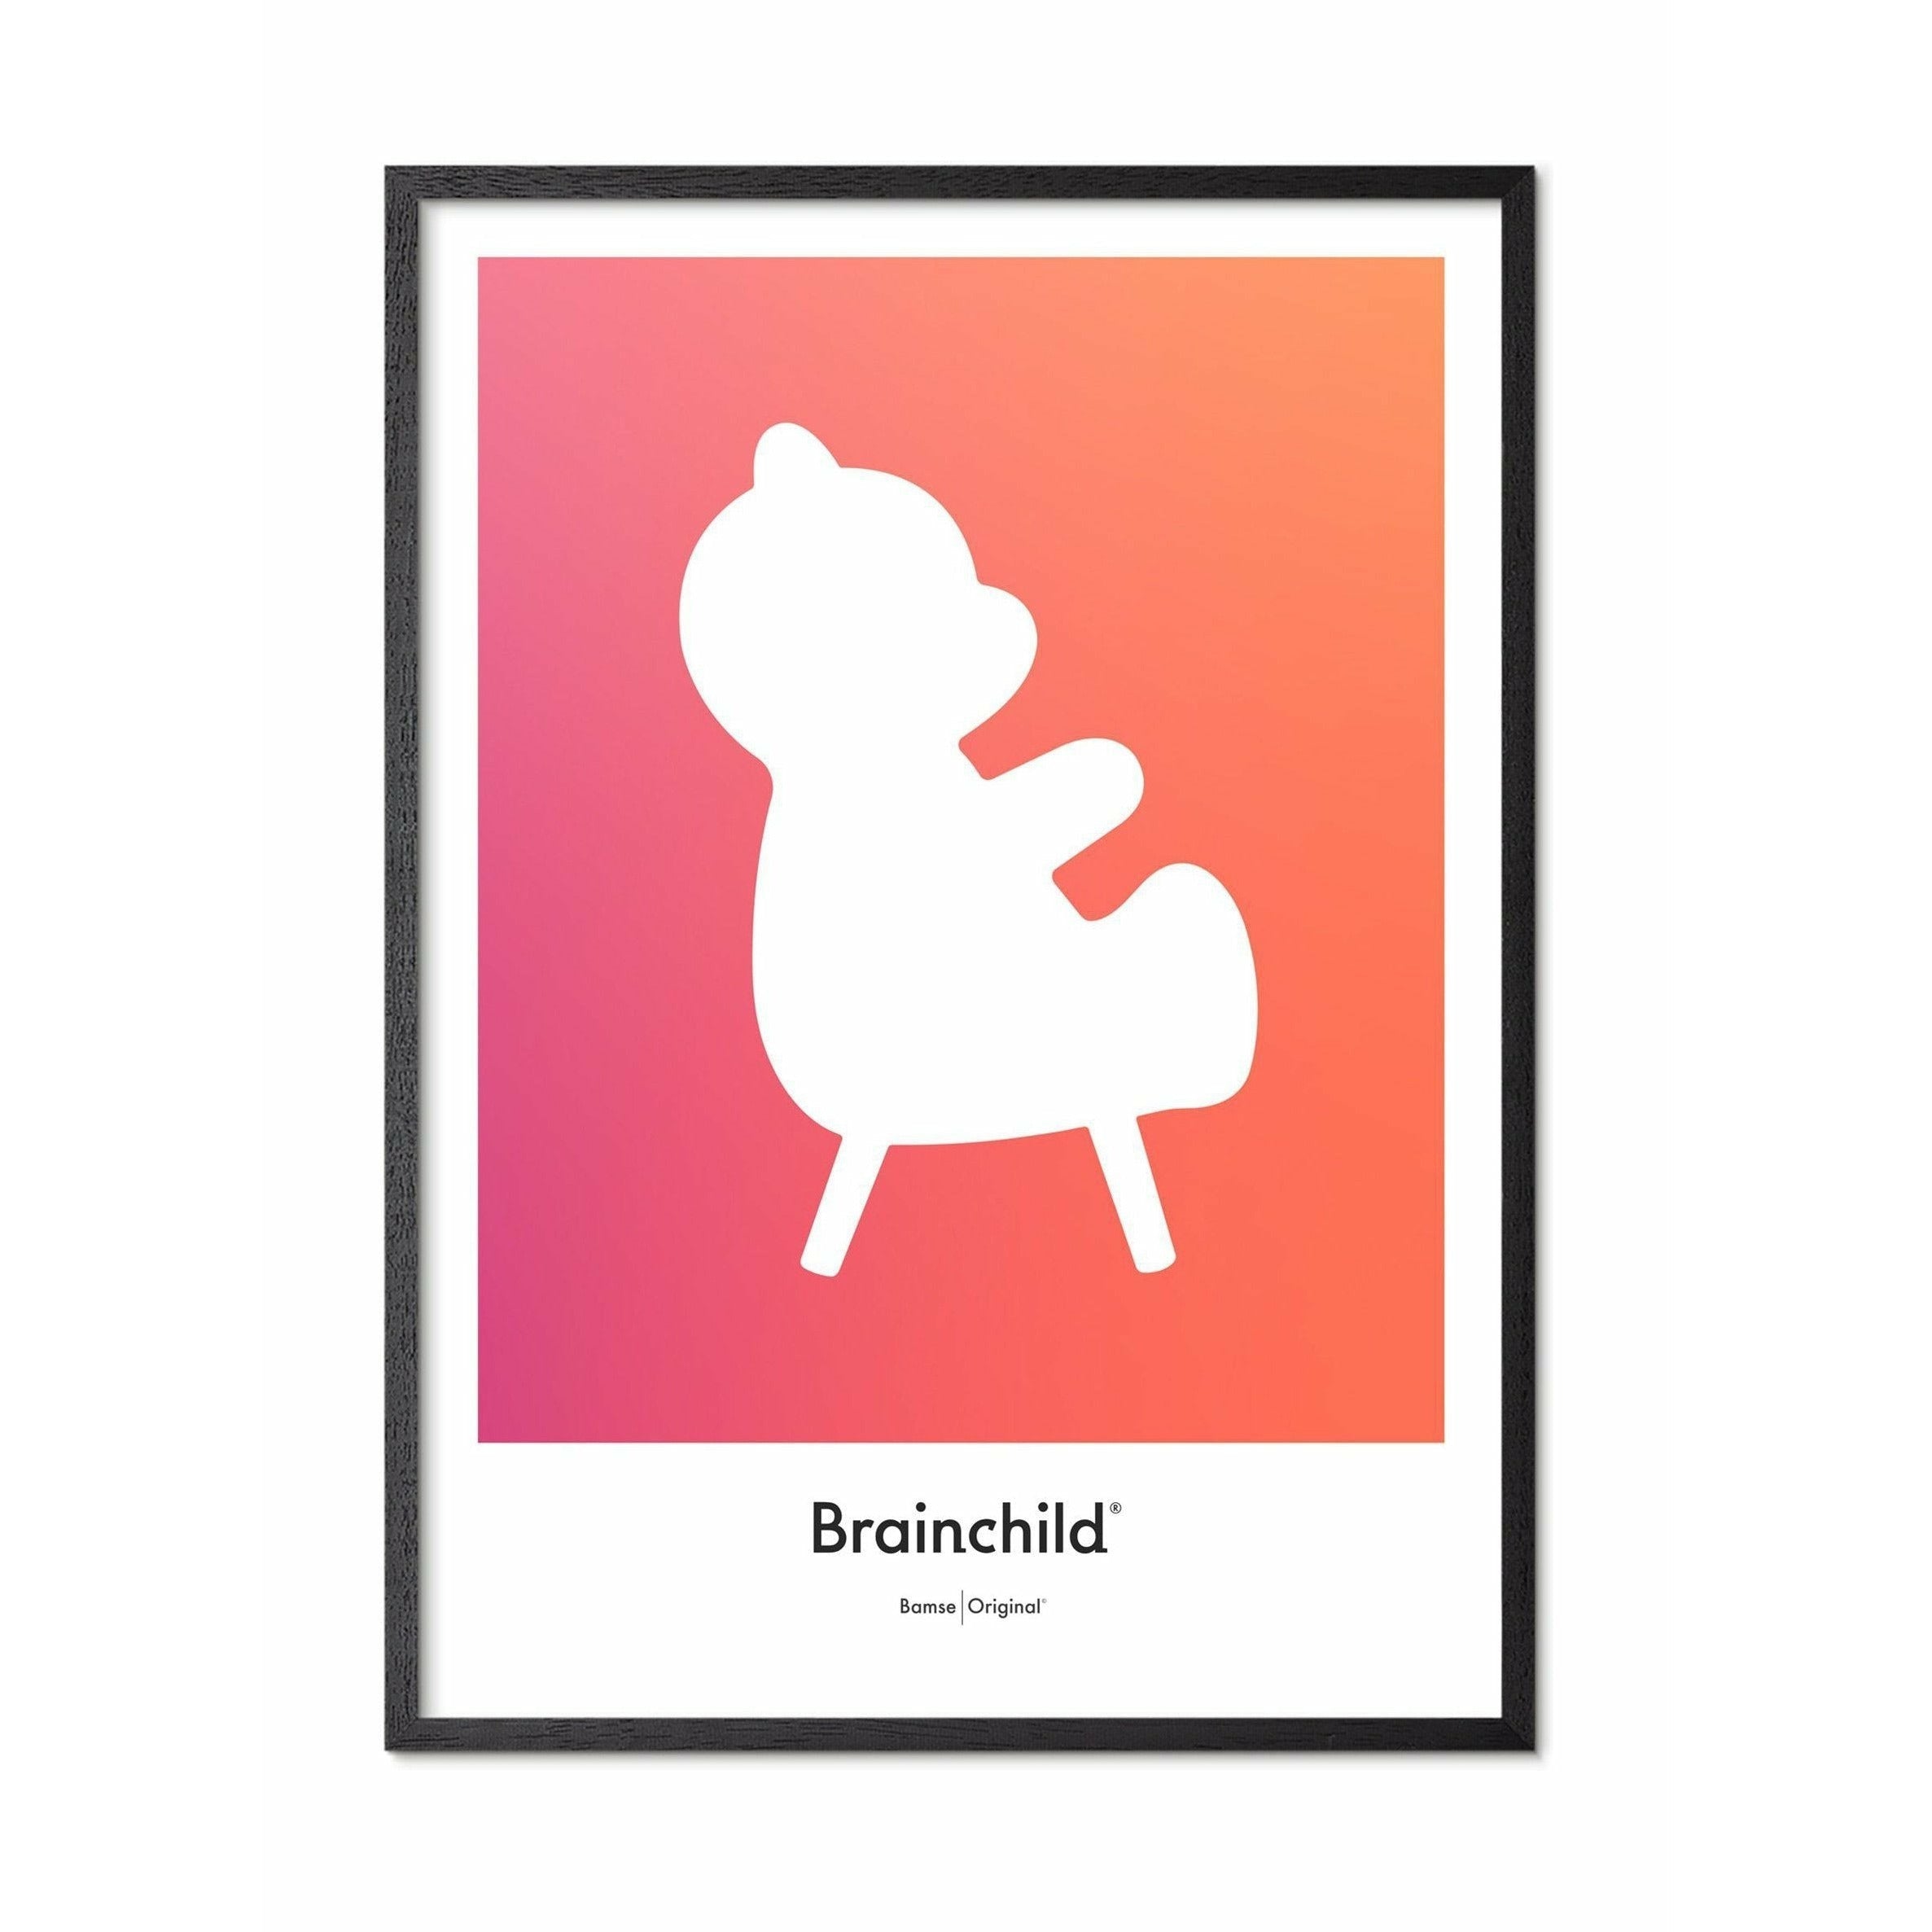 Brainchild Teddy Bear Design Icon Poster, Frame in Black Lacquered Wood 50x70 cm, Orange